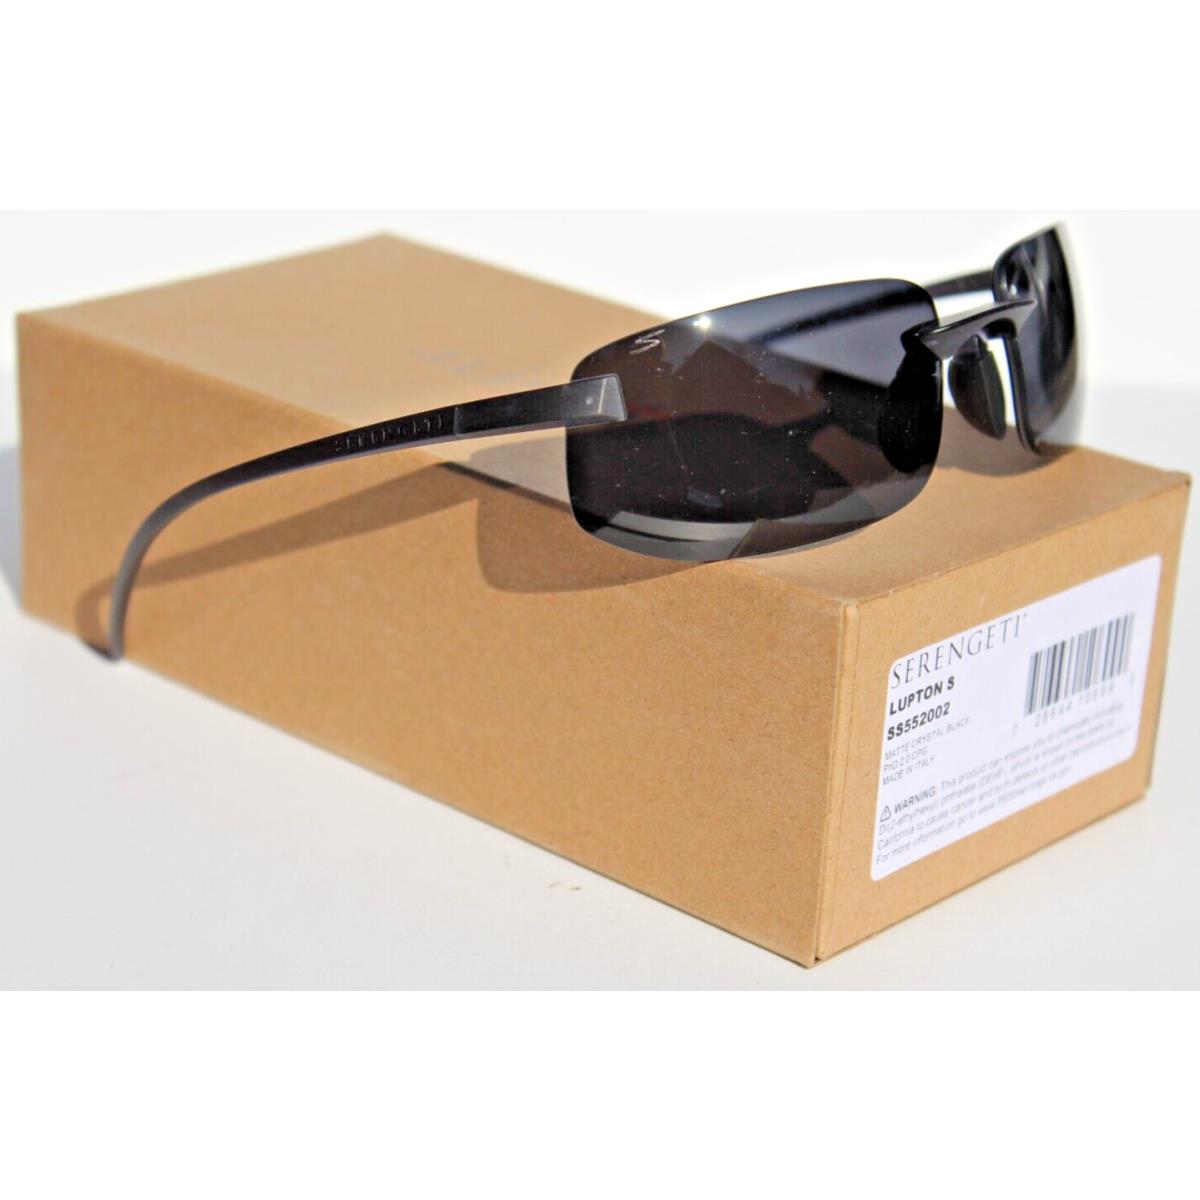 Serengeti Lupton S Polarized Sunglasses Crystal Black/phd 2.0 Cpg SS552002 Italy